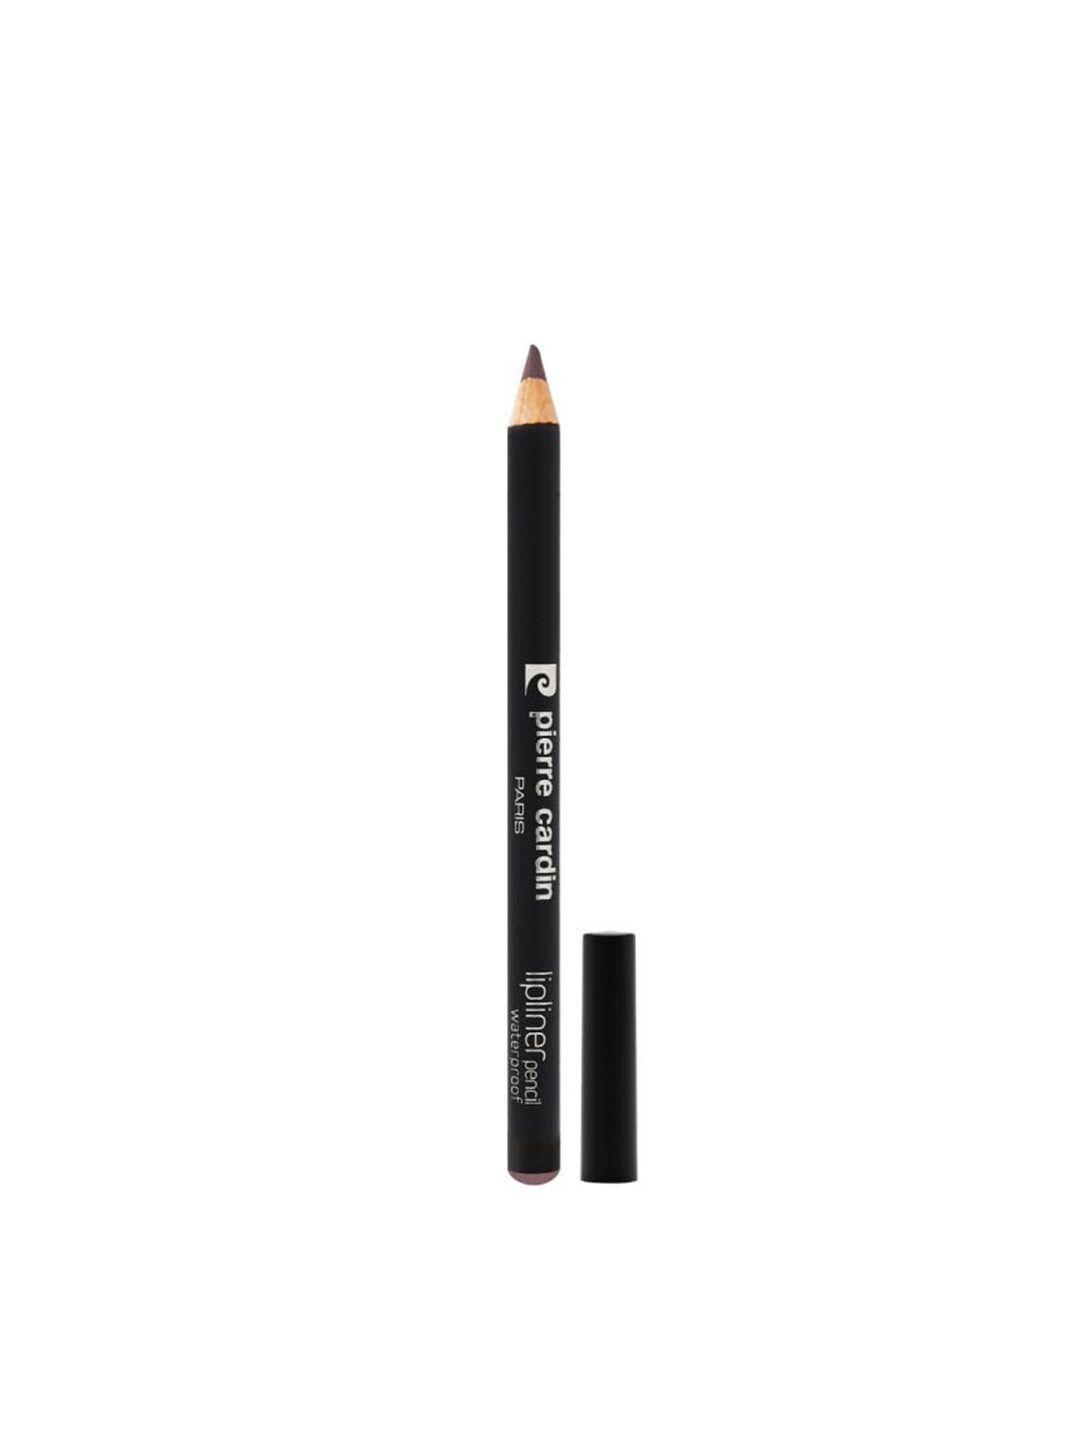 pierre cardin paris waterproof & longlasting lip liner pencil with vitamin e 0.4g - plummy 395